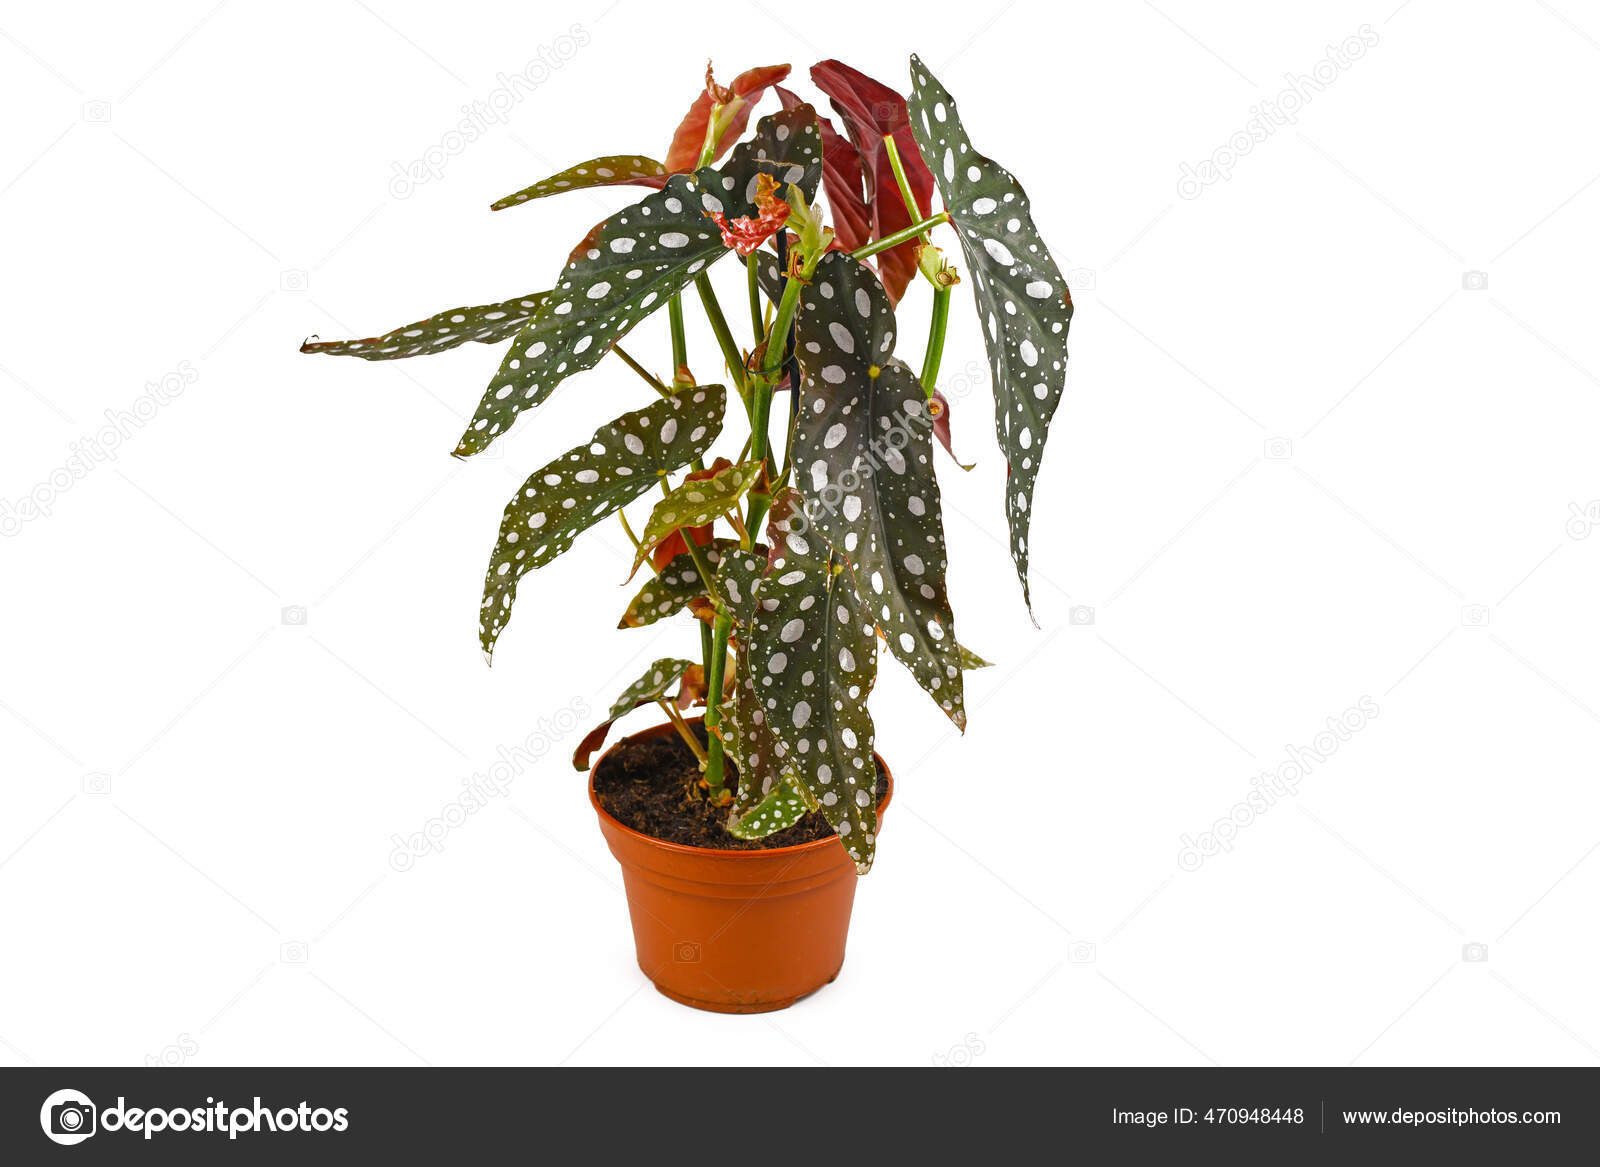 Begonia maculata Stock Photos, Royalty Free Begonia maculata Images |  Depositphotos